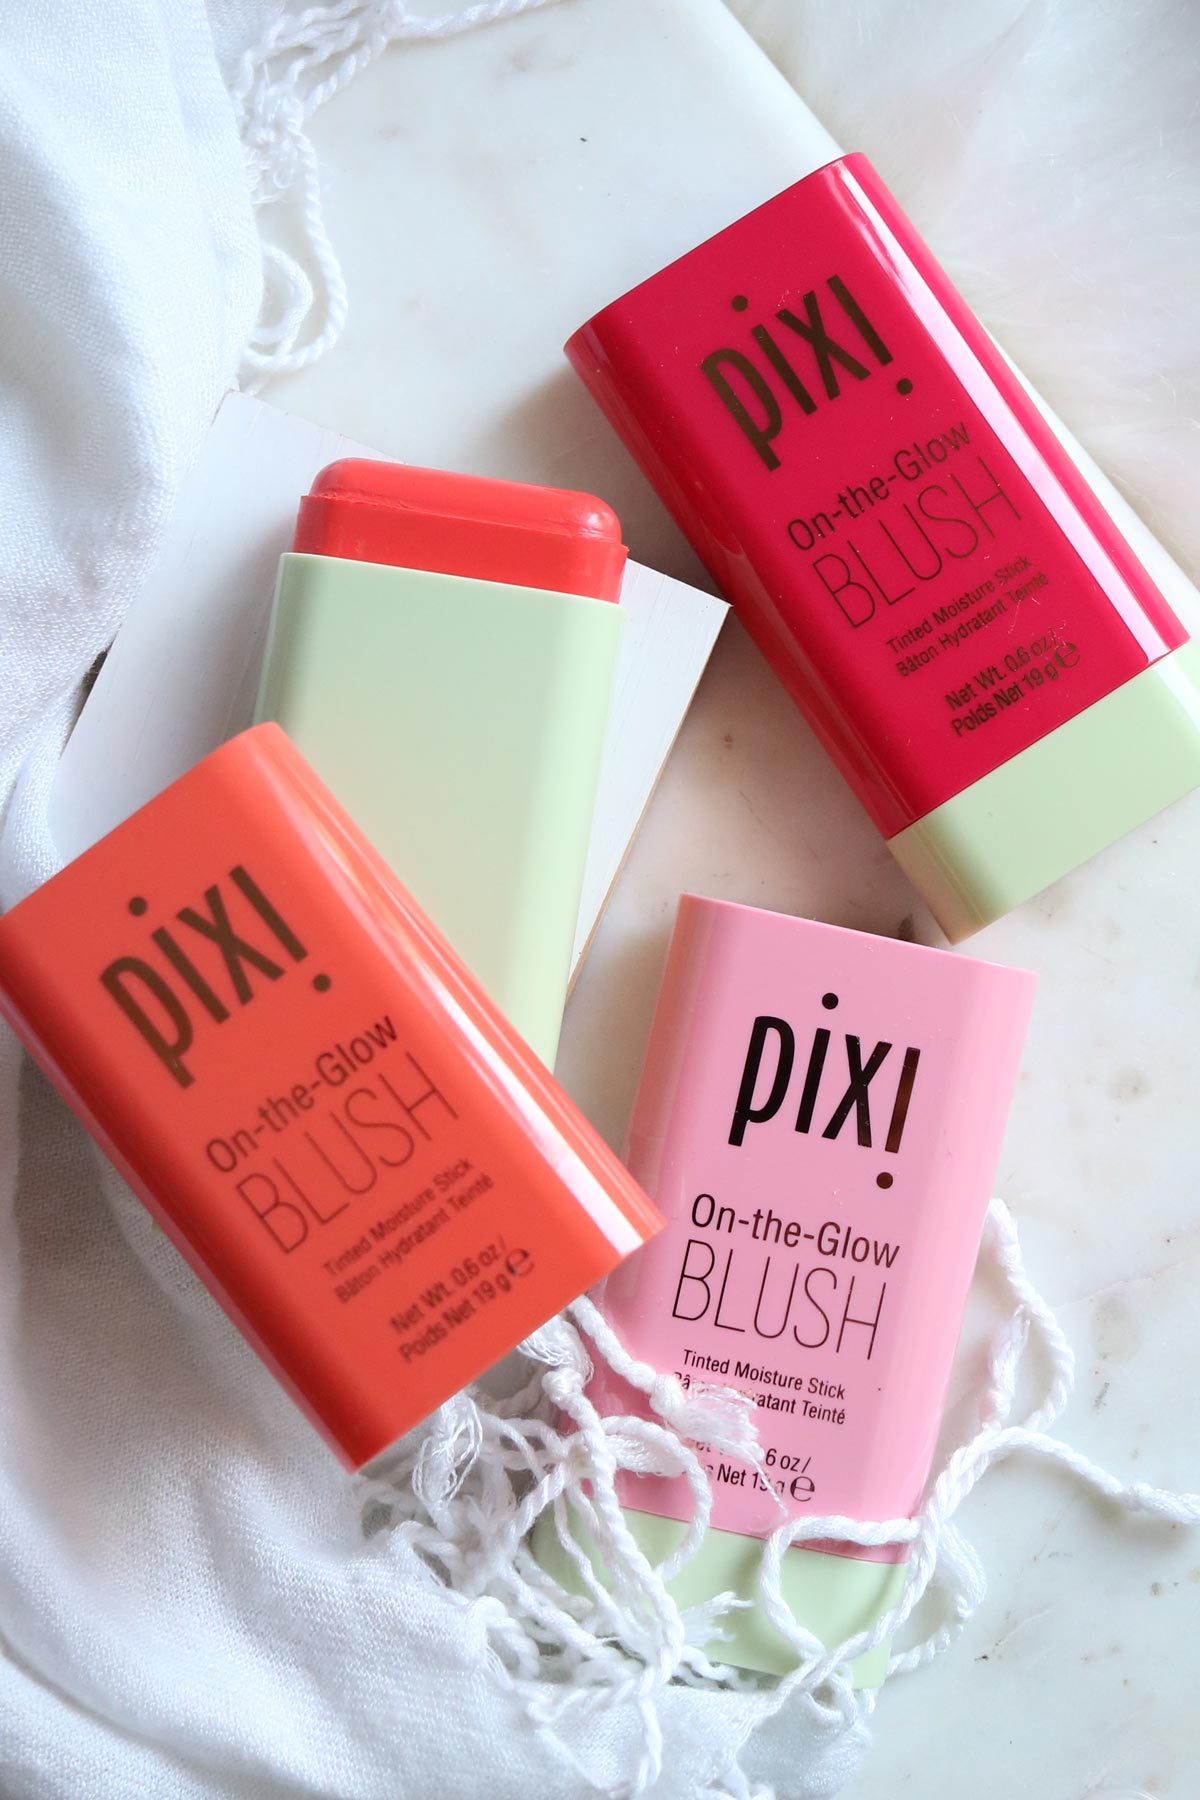 Pixi On the Glow Blush – Dewy Cheek Blush Goals